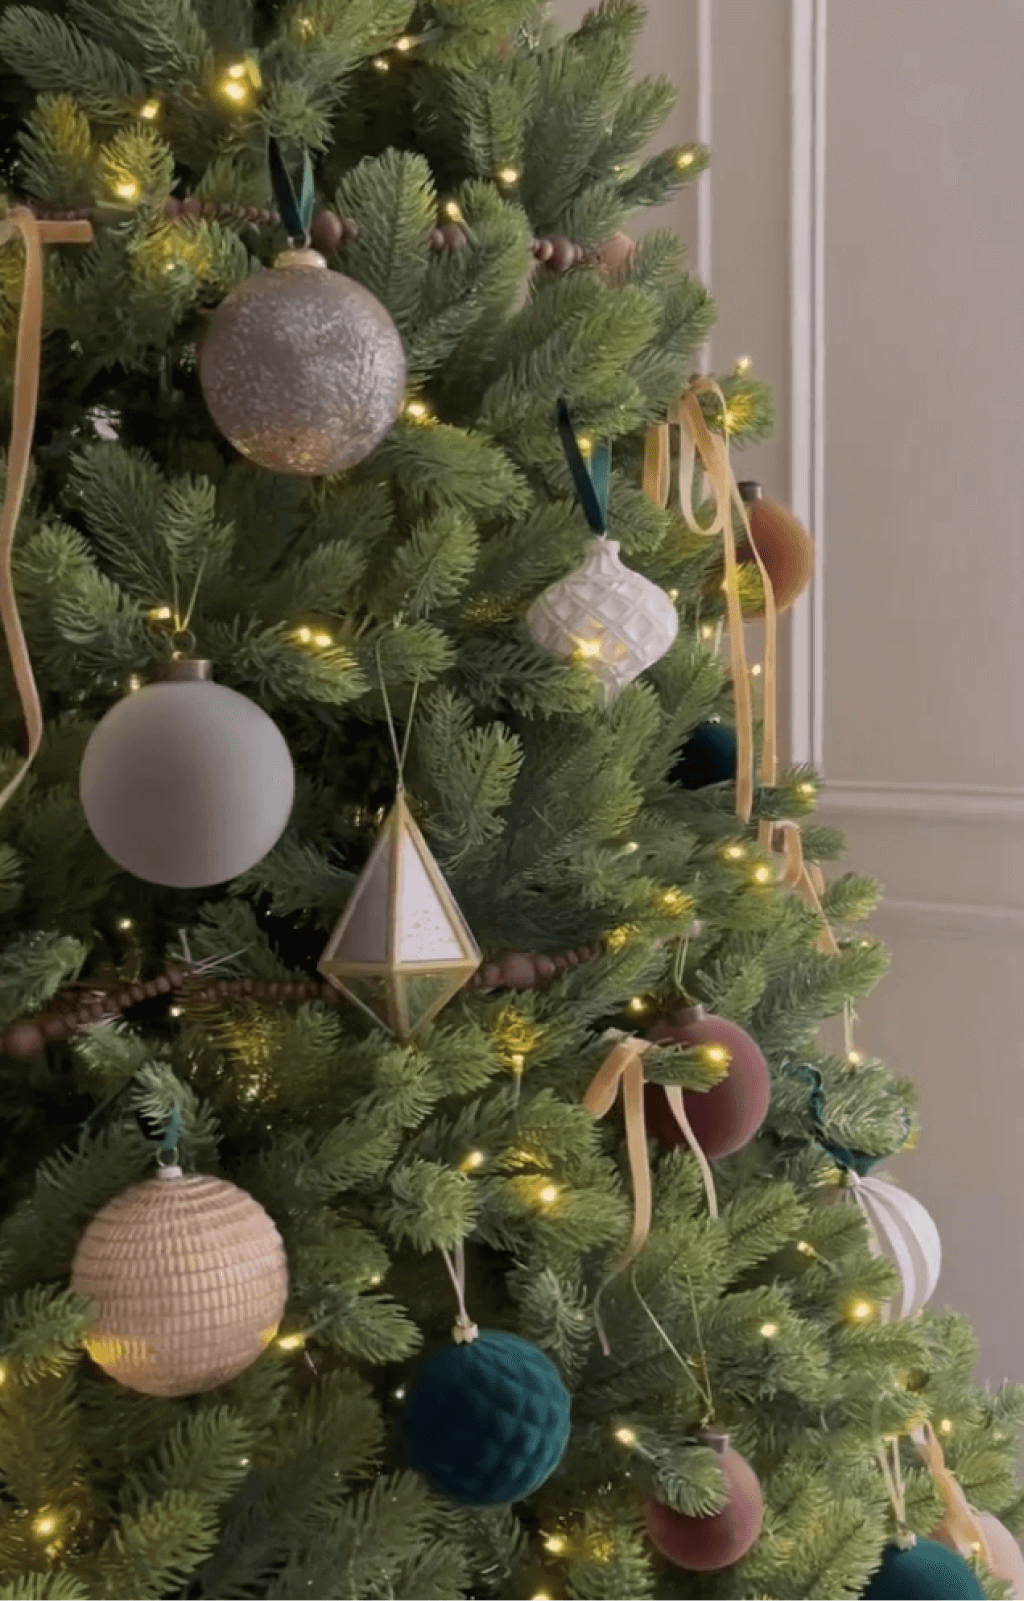 King of Christmas 7.5' Royal Fir Quick-Shape Artificial Christmas Tree Unlit